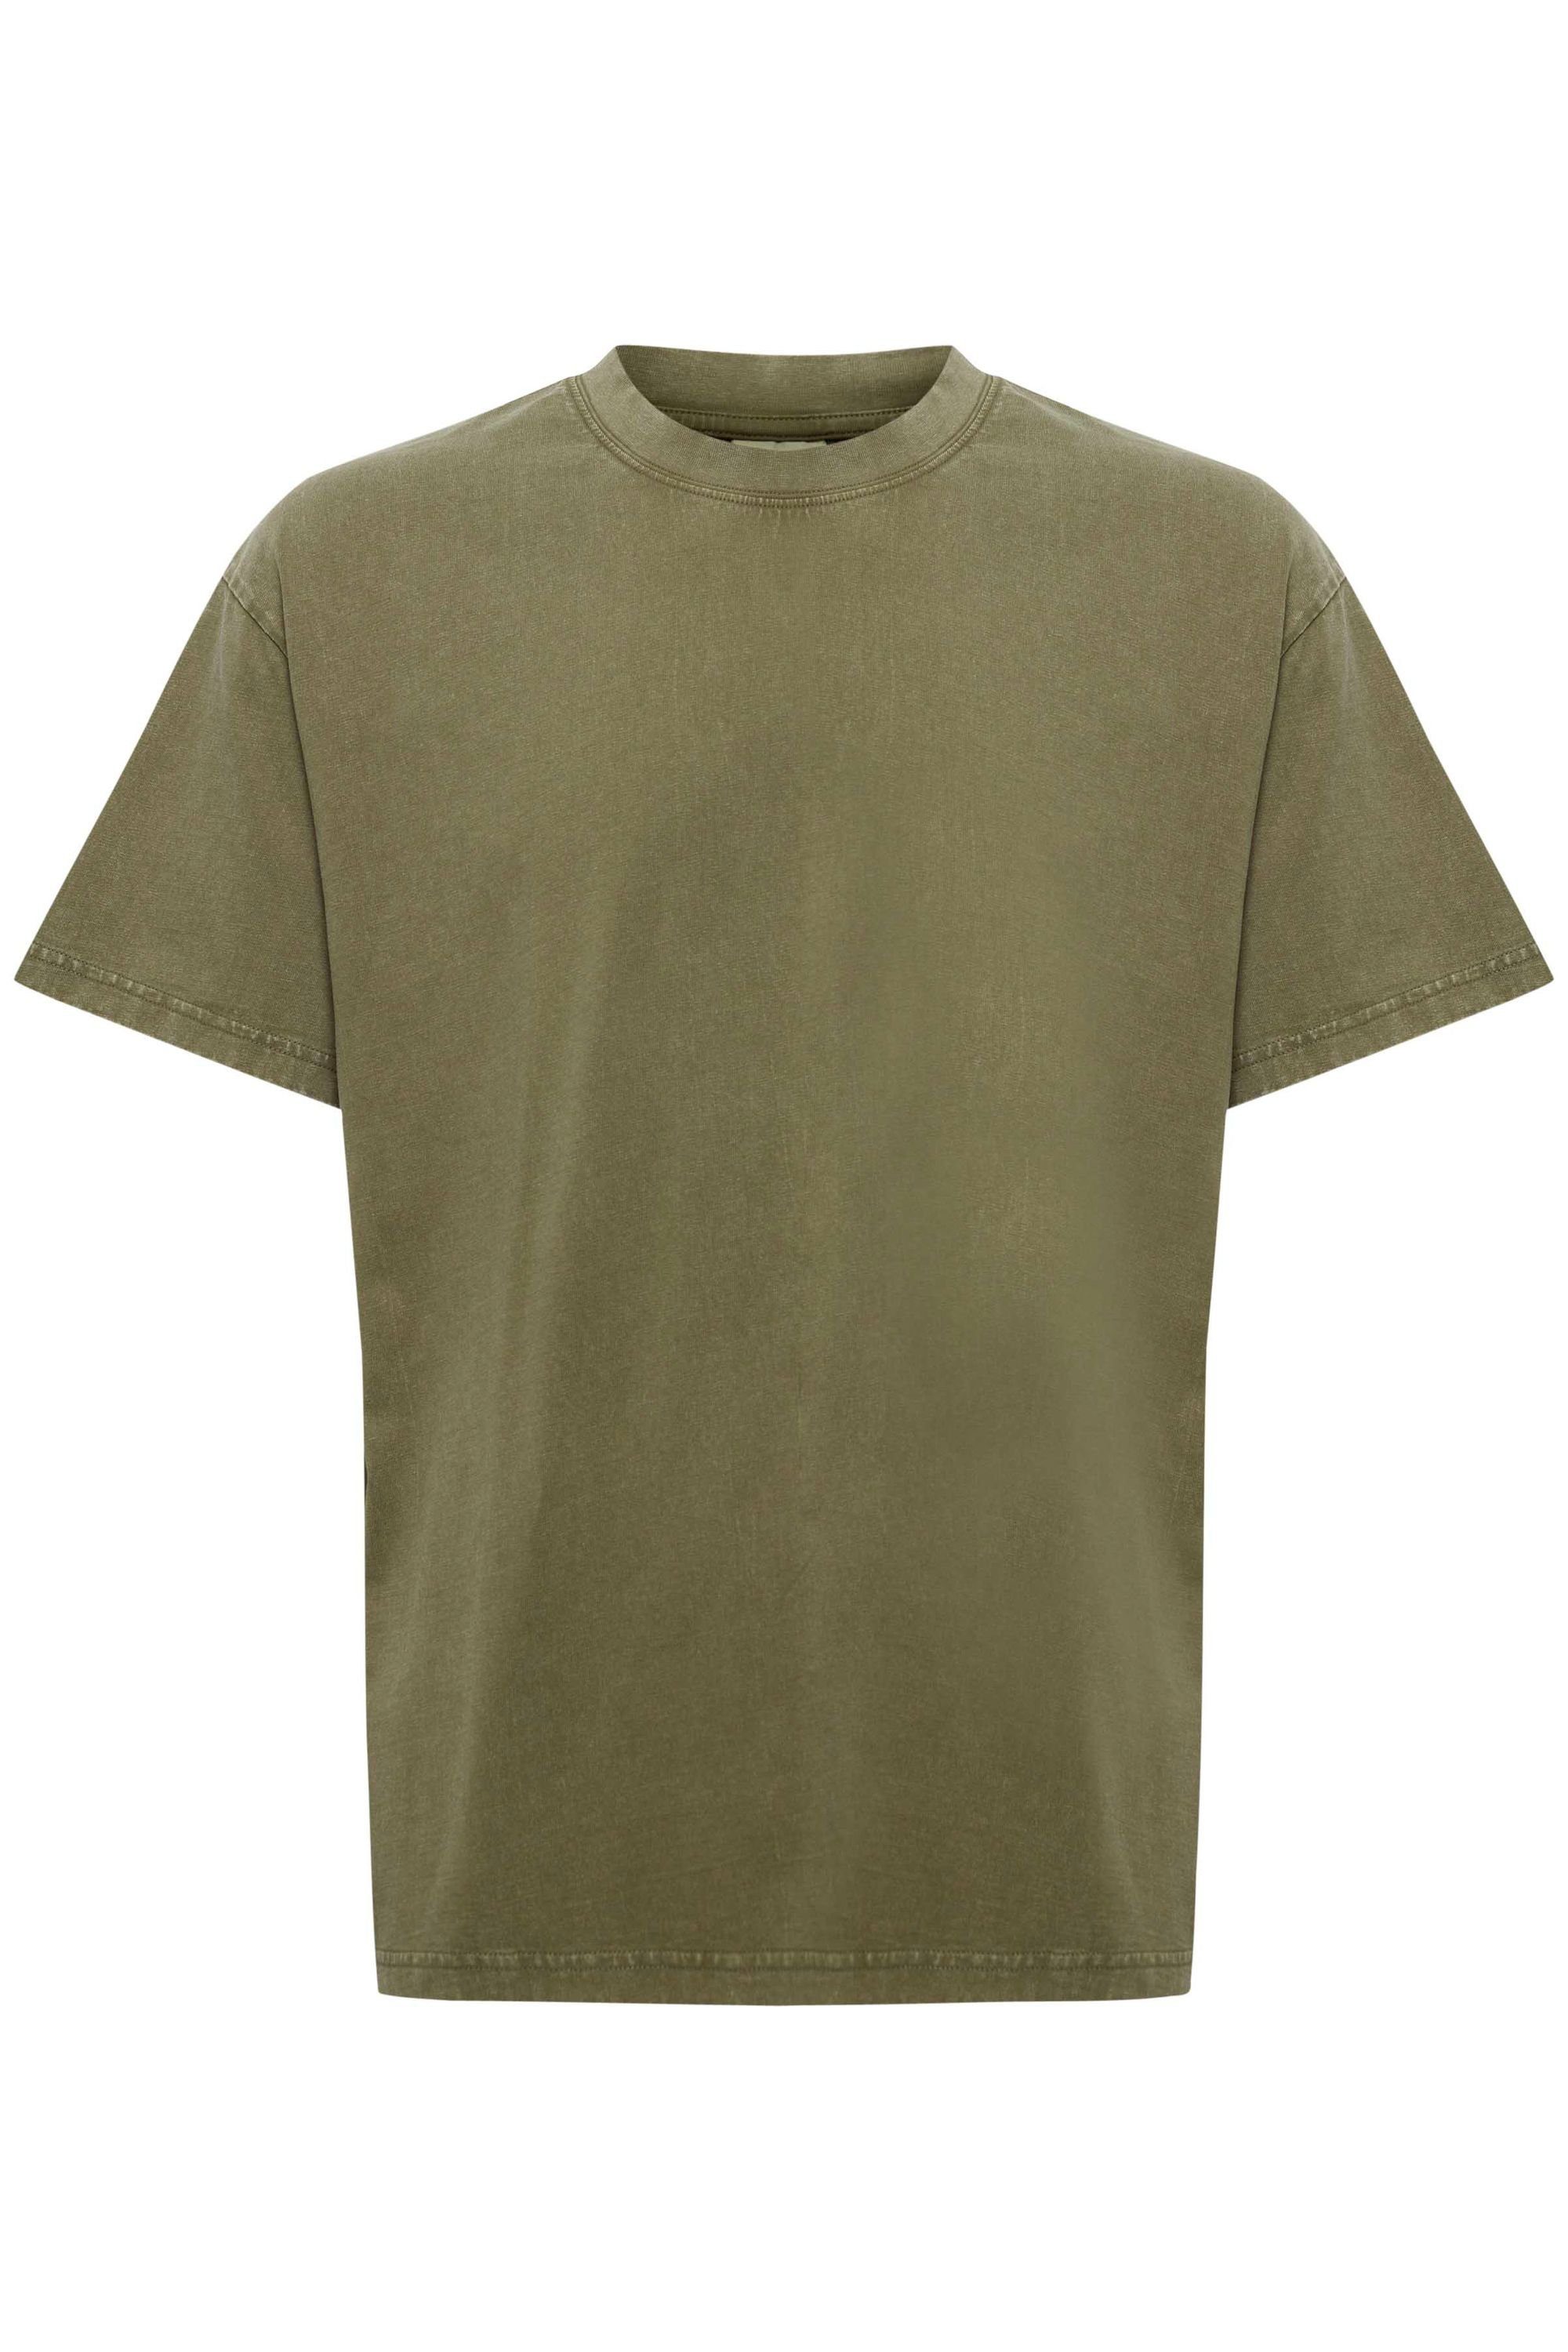 Olive T-Shirt 21107878 !Solid - Dusty (180515) SDGerlak